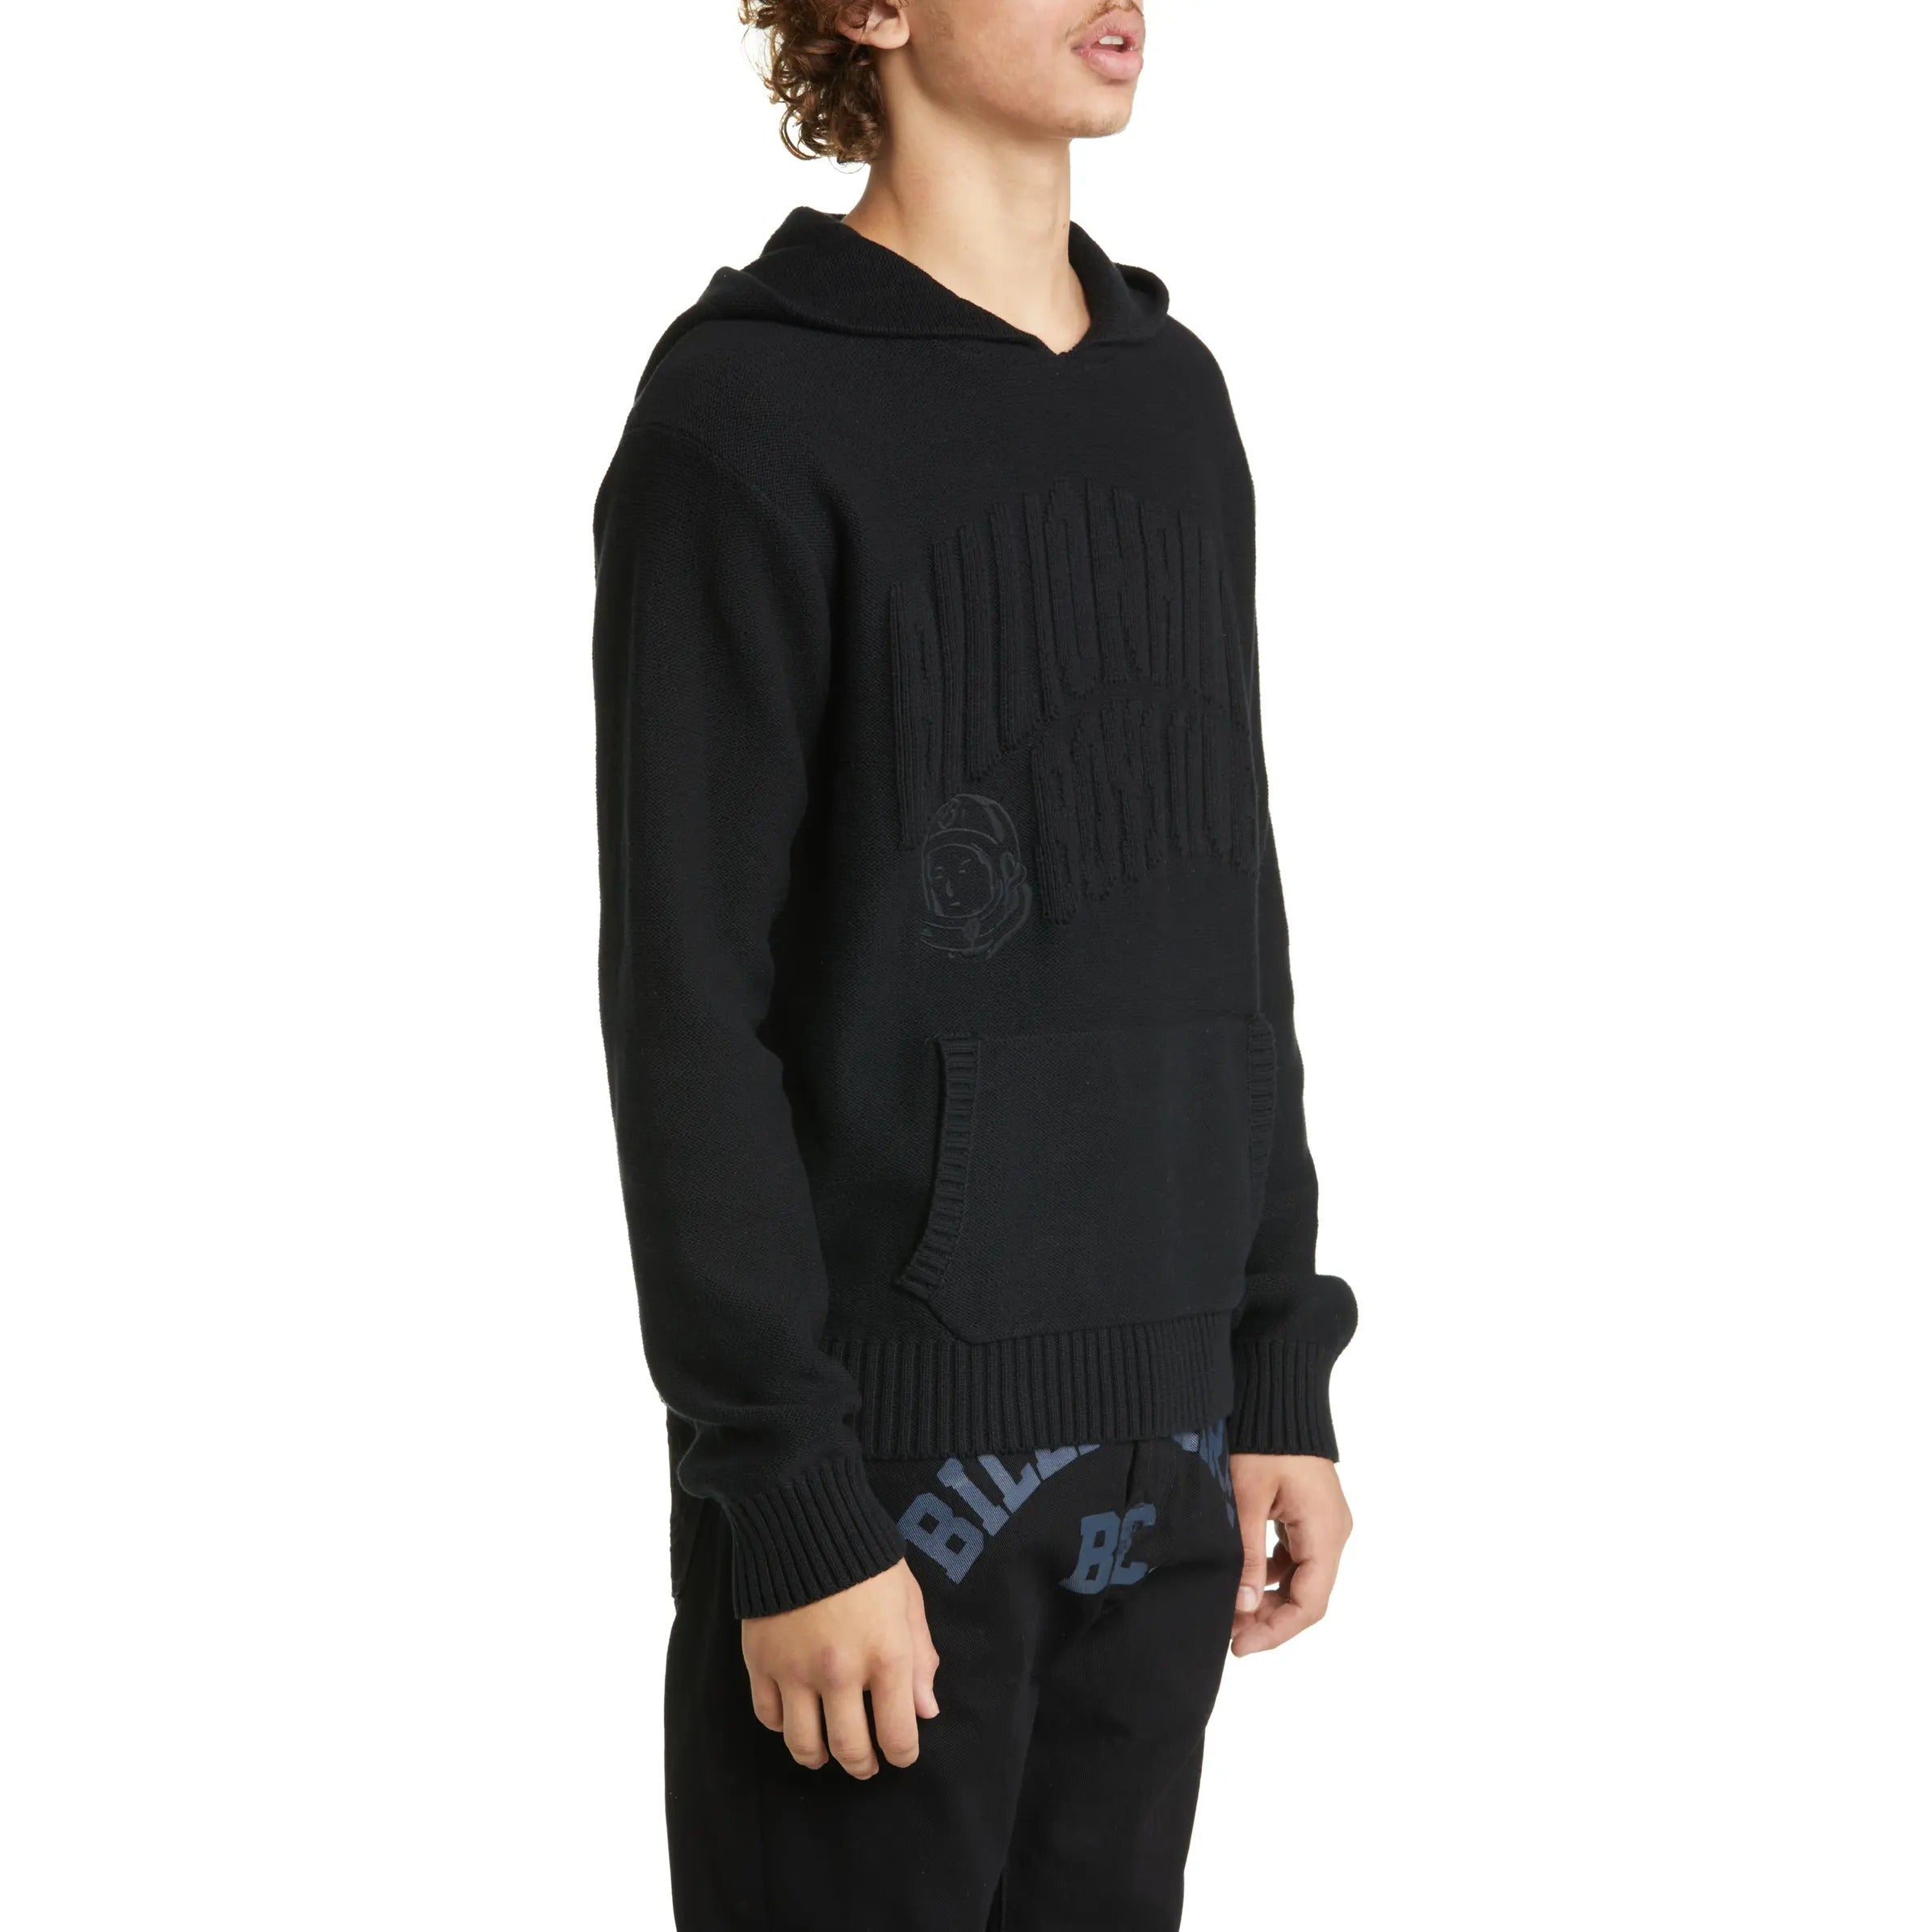 Billionaire Boys Club Arch Sweater Black - SWEATERS - Canada